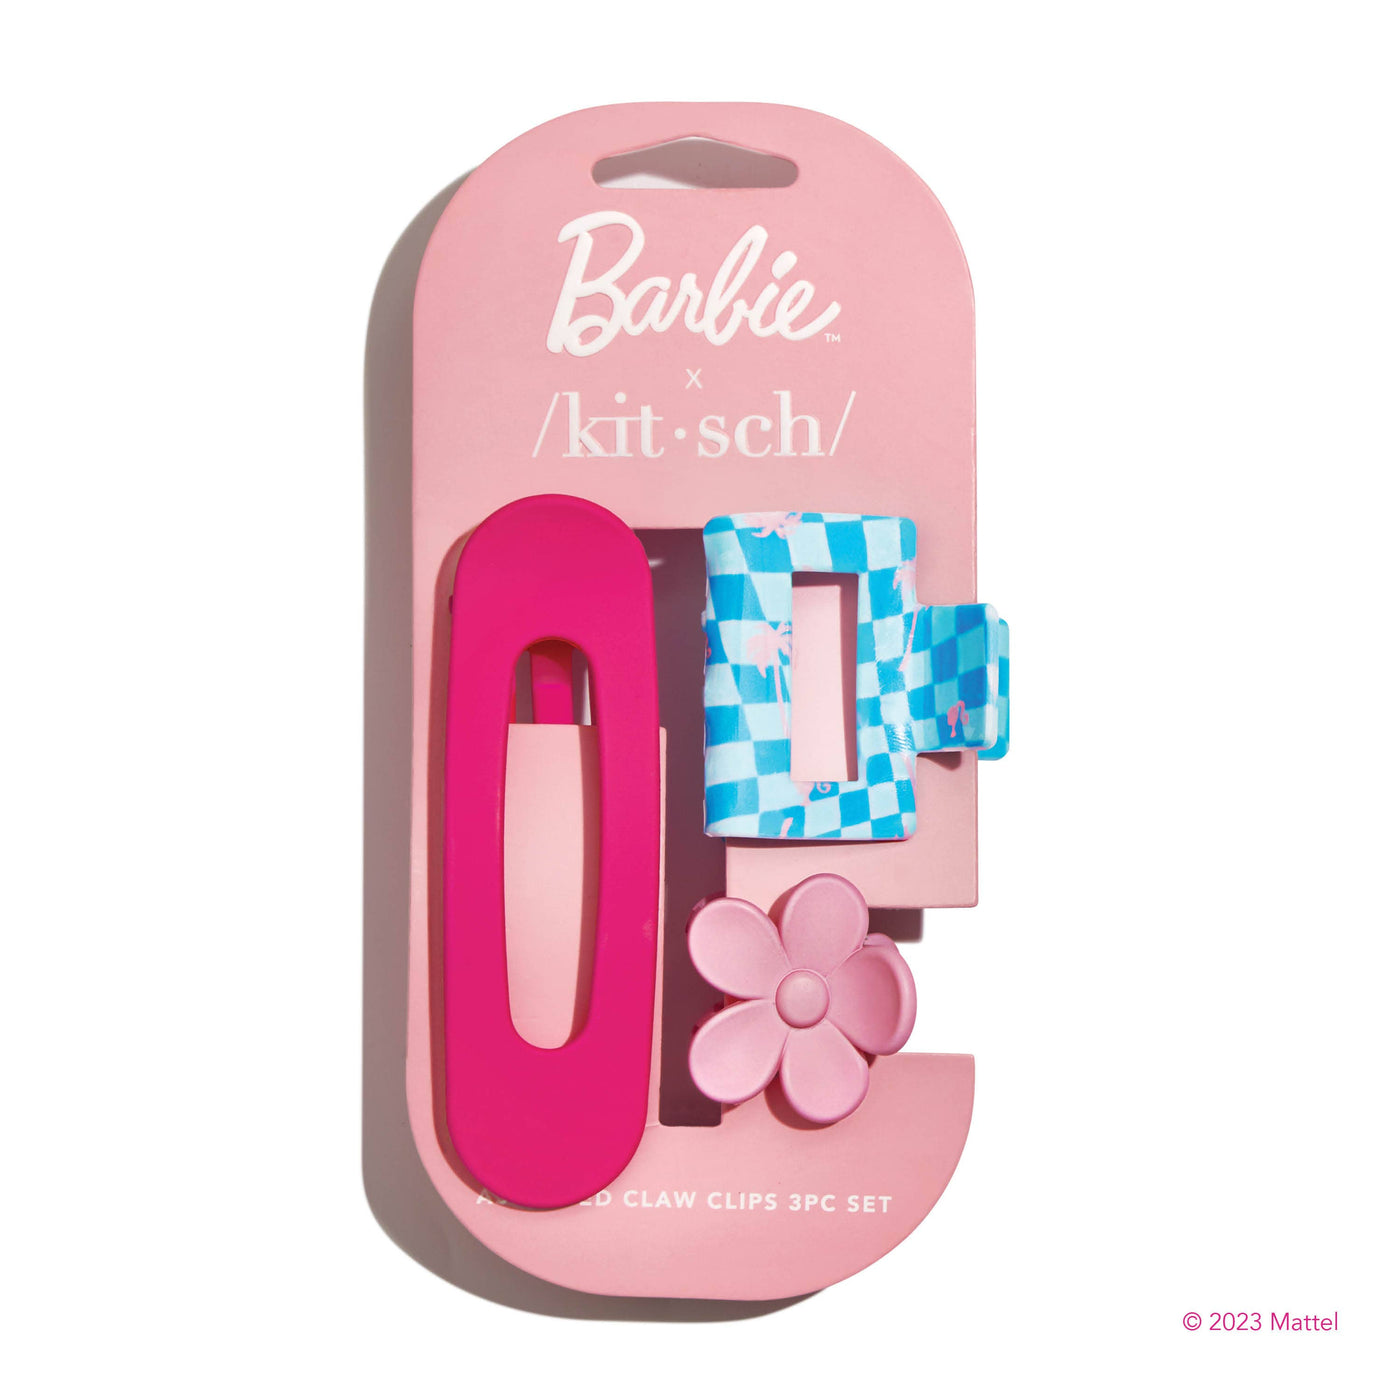 Barbie x kitsch Assorted 3pc Claw Clip Set